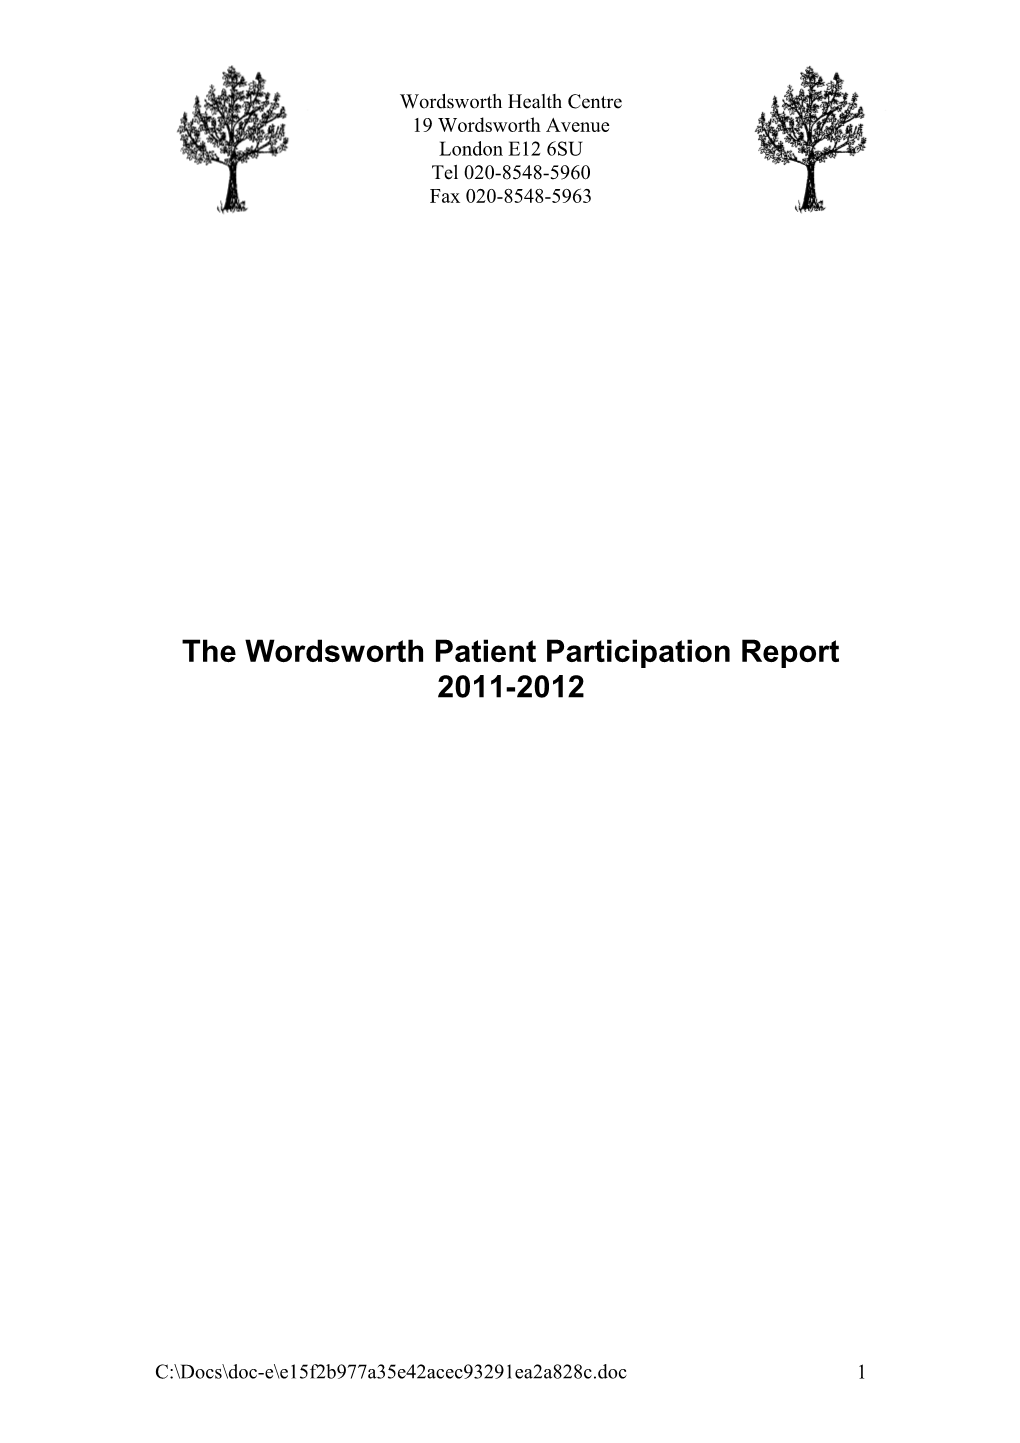 The Wordsworth Patient Participation Report